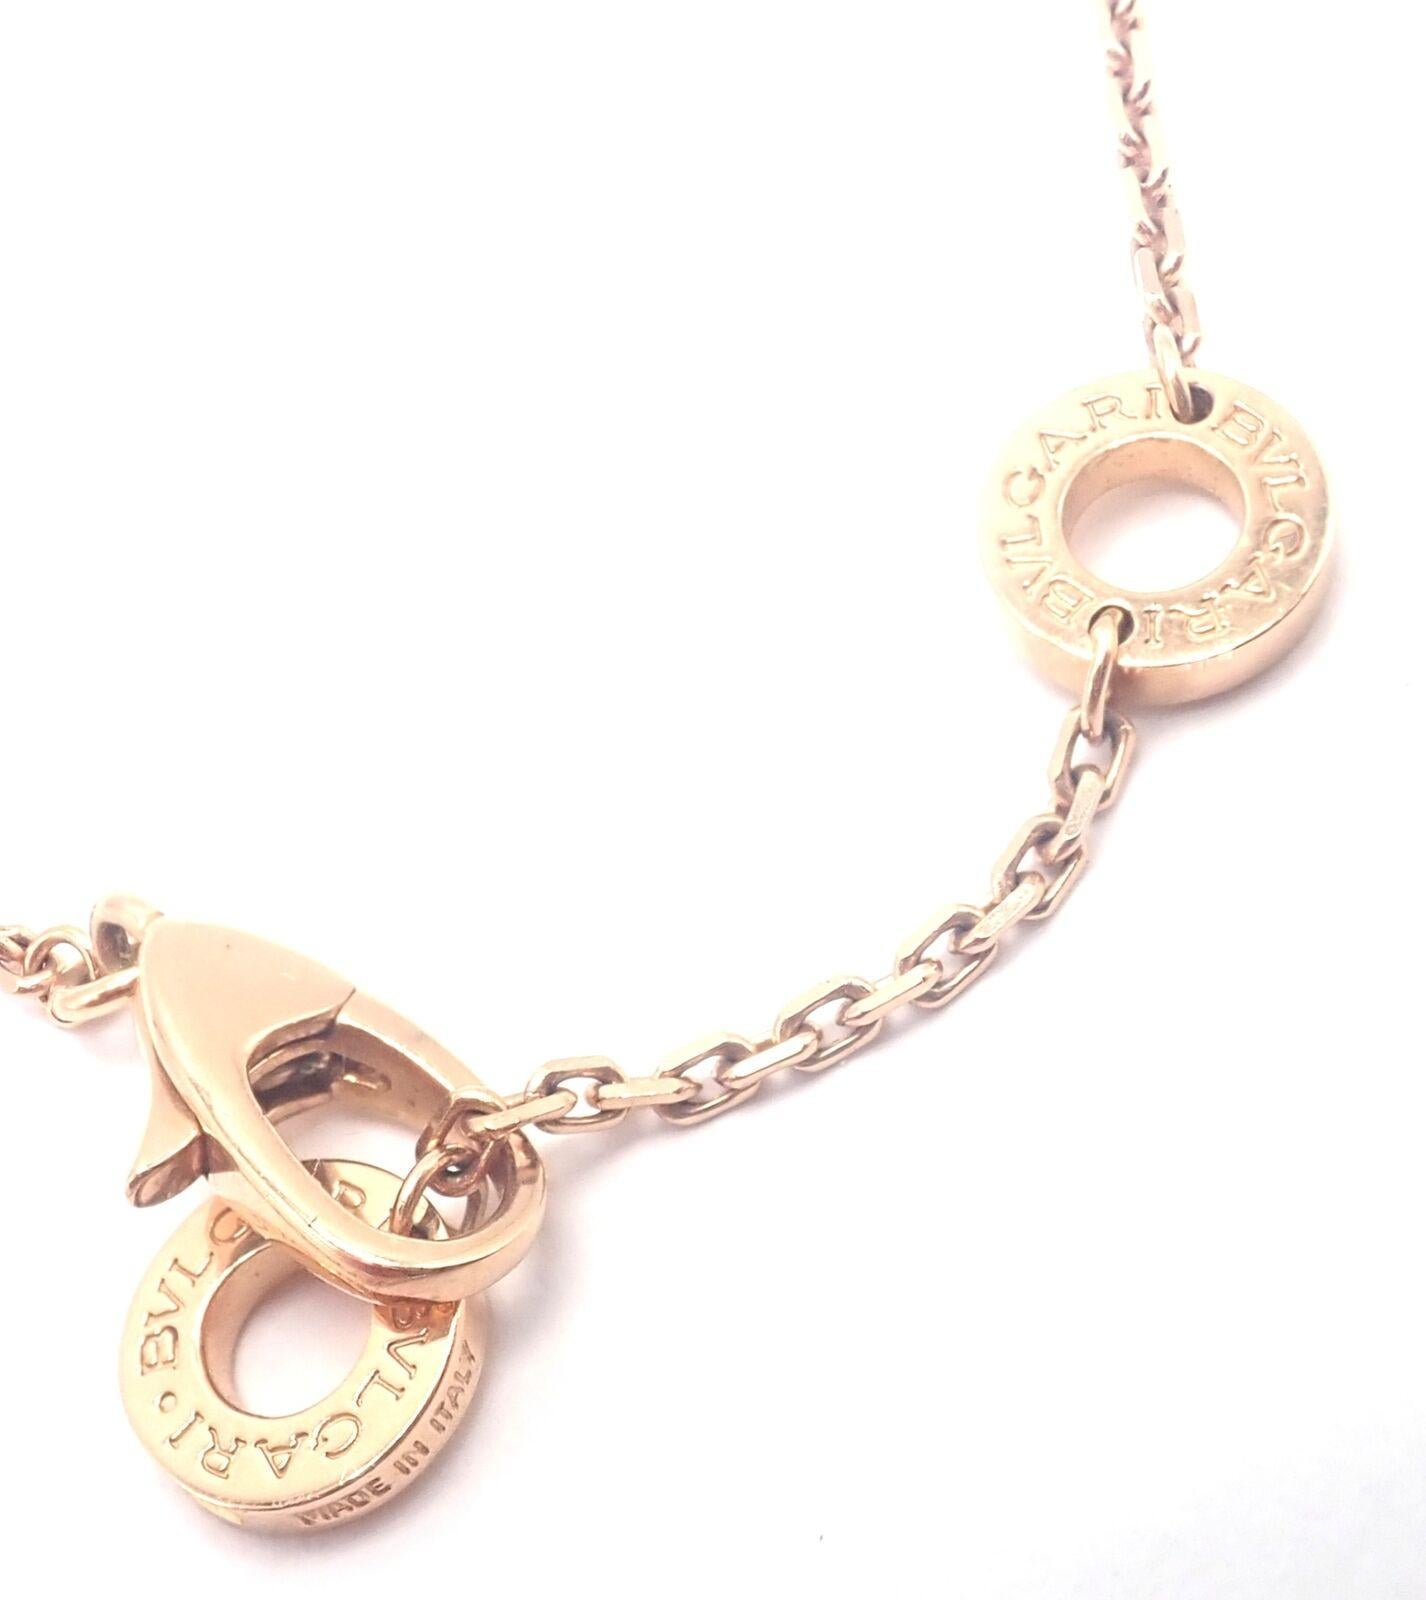 bvlgari swan necklace price in india